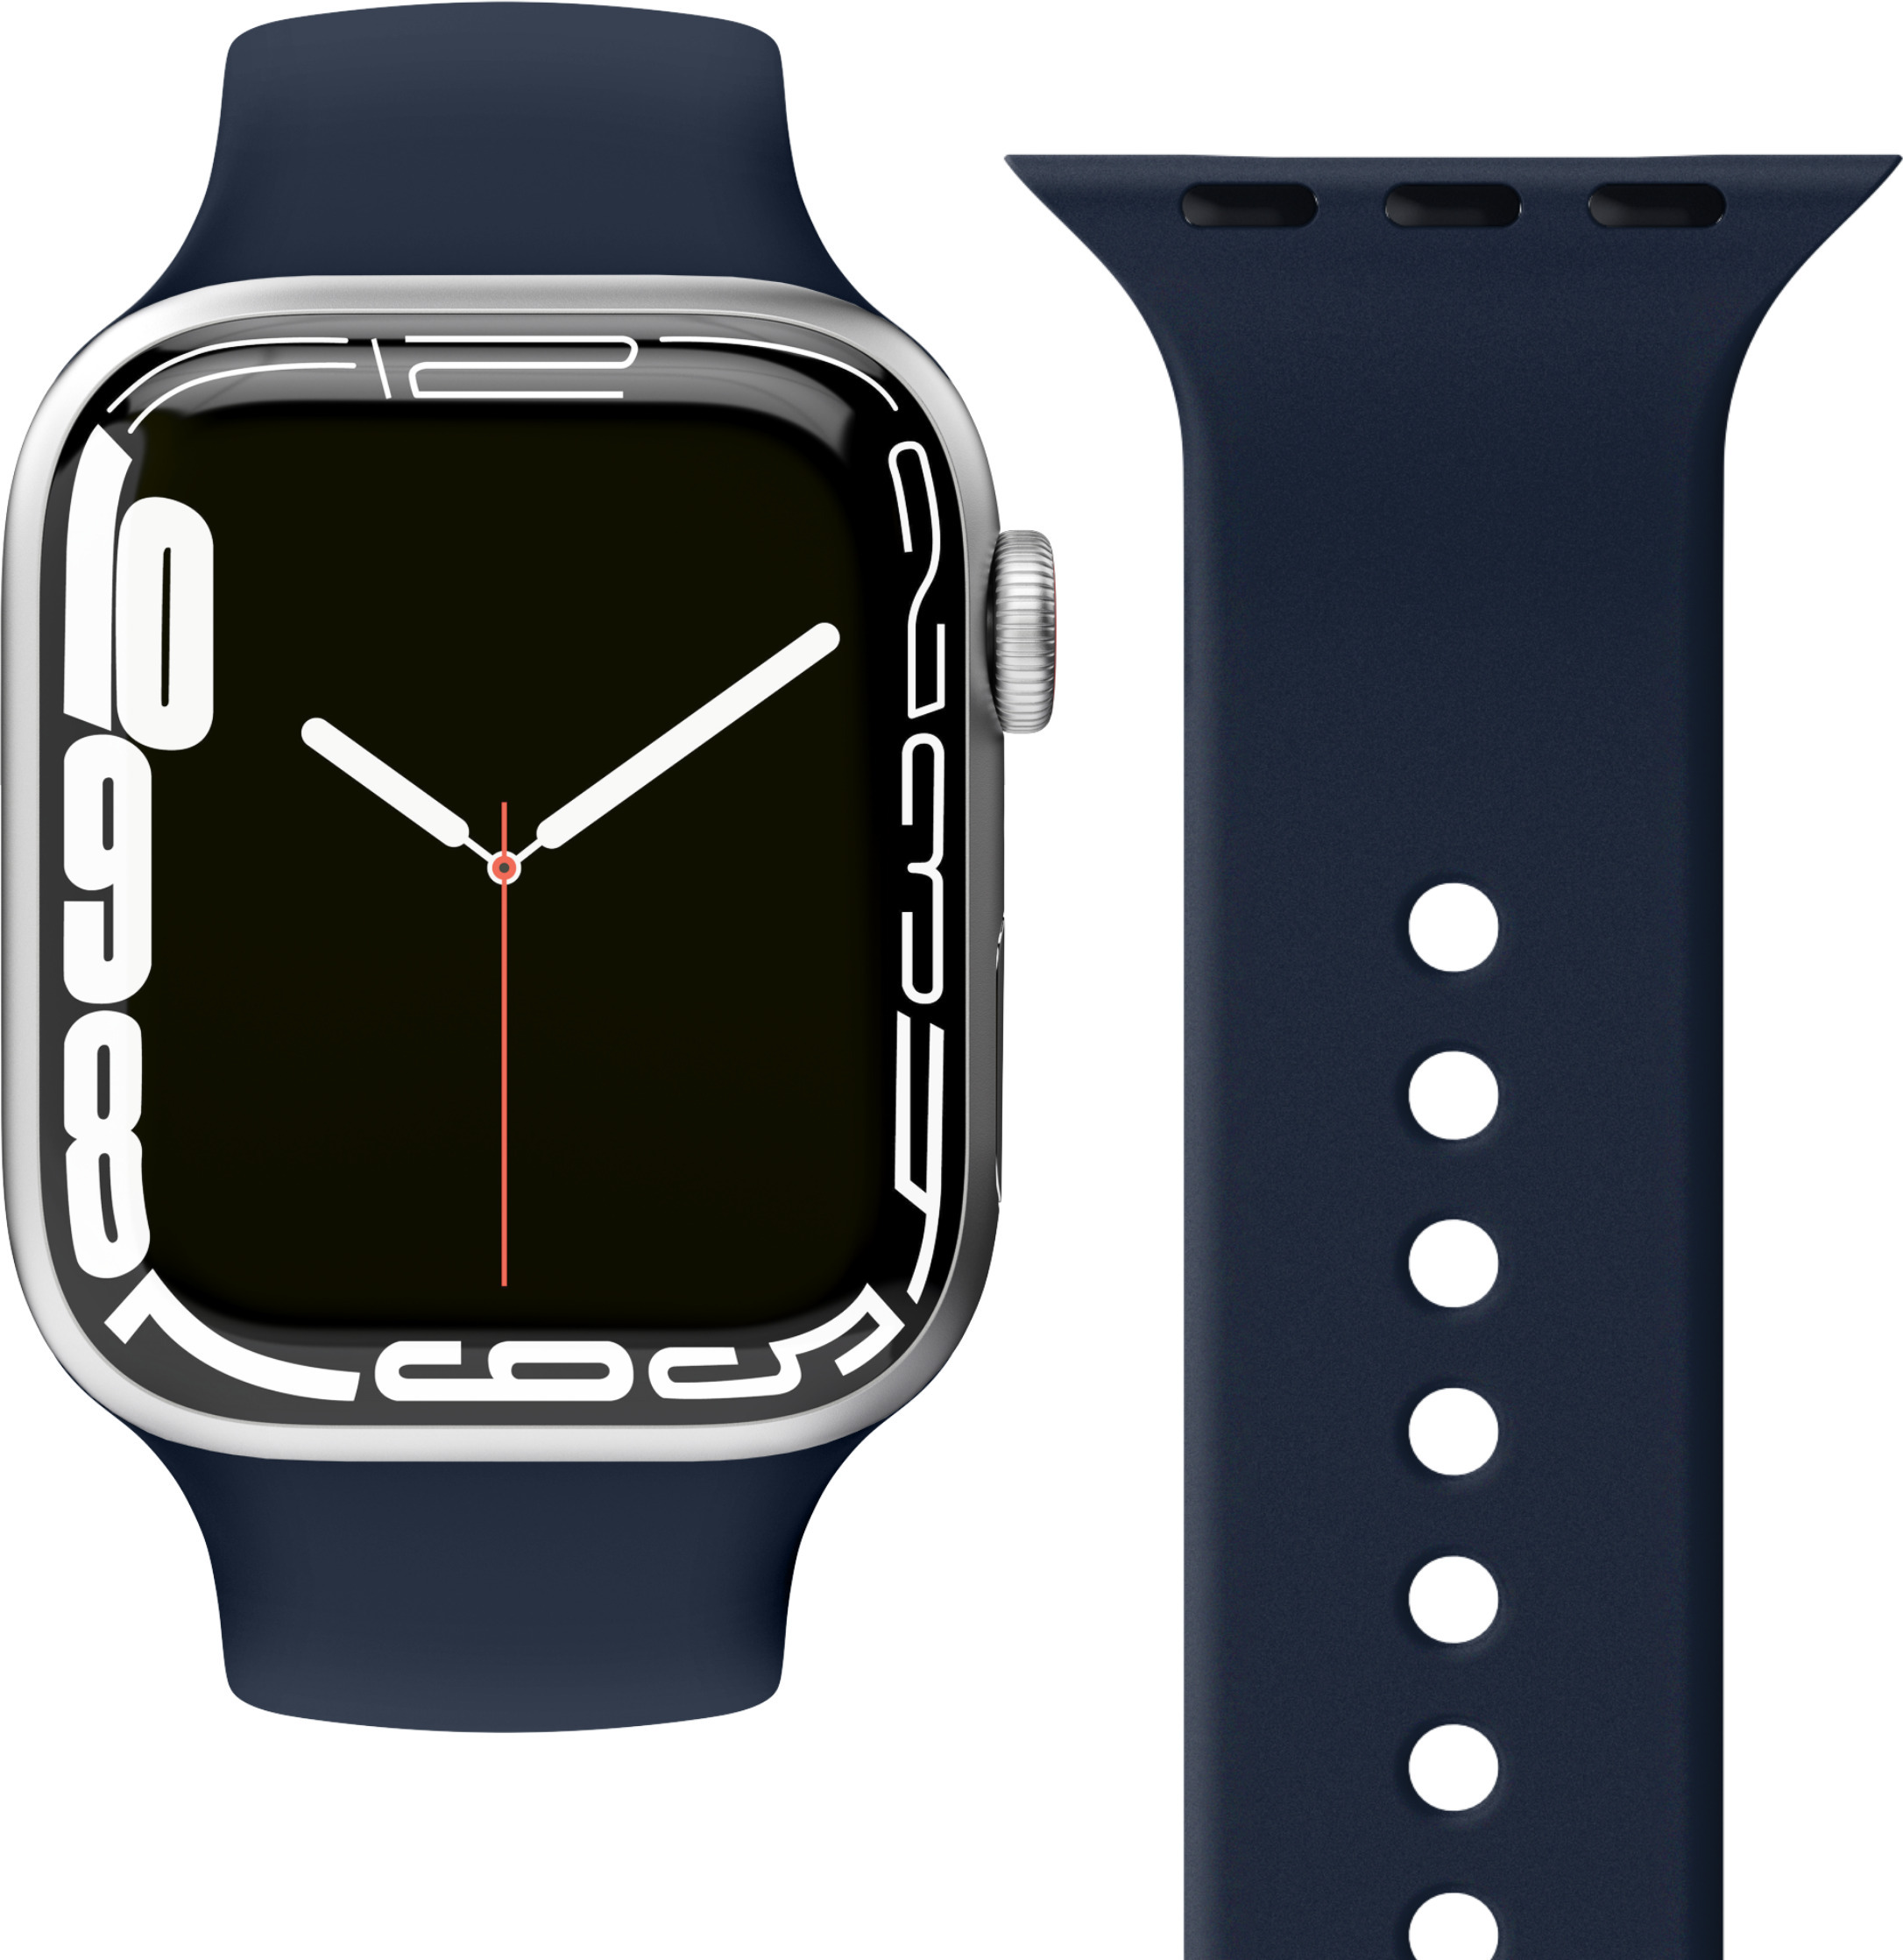 Original Apple watch bands, Apple smart watch accessories